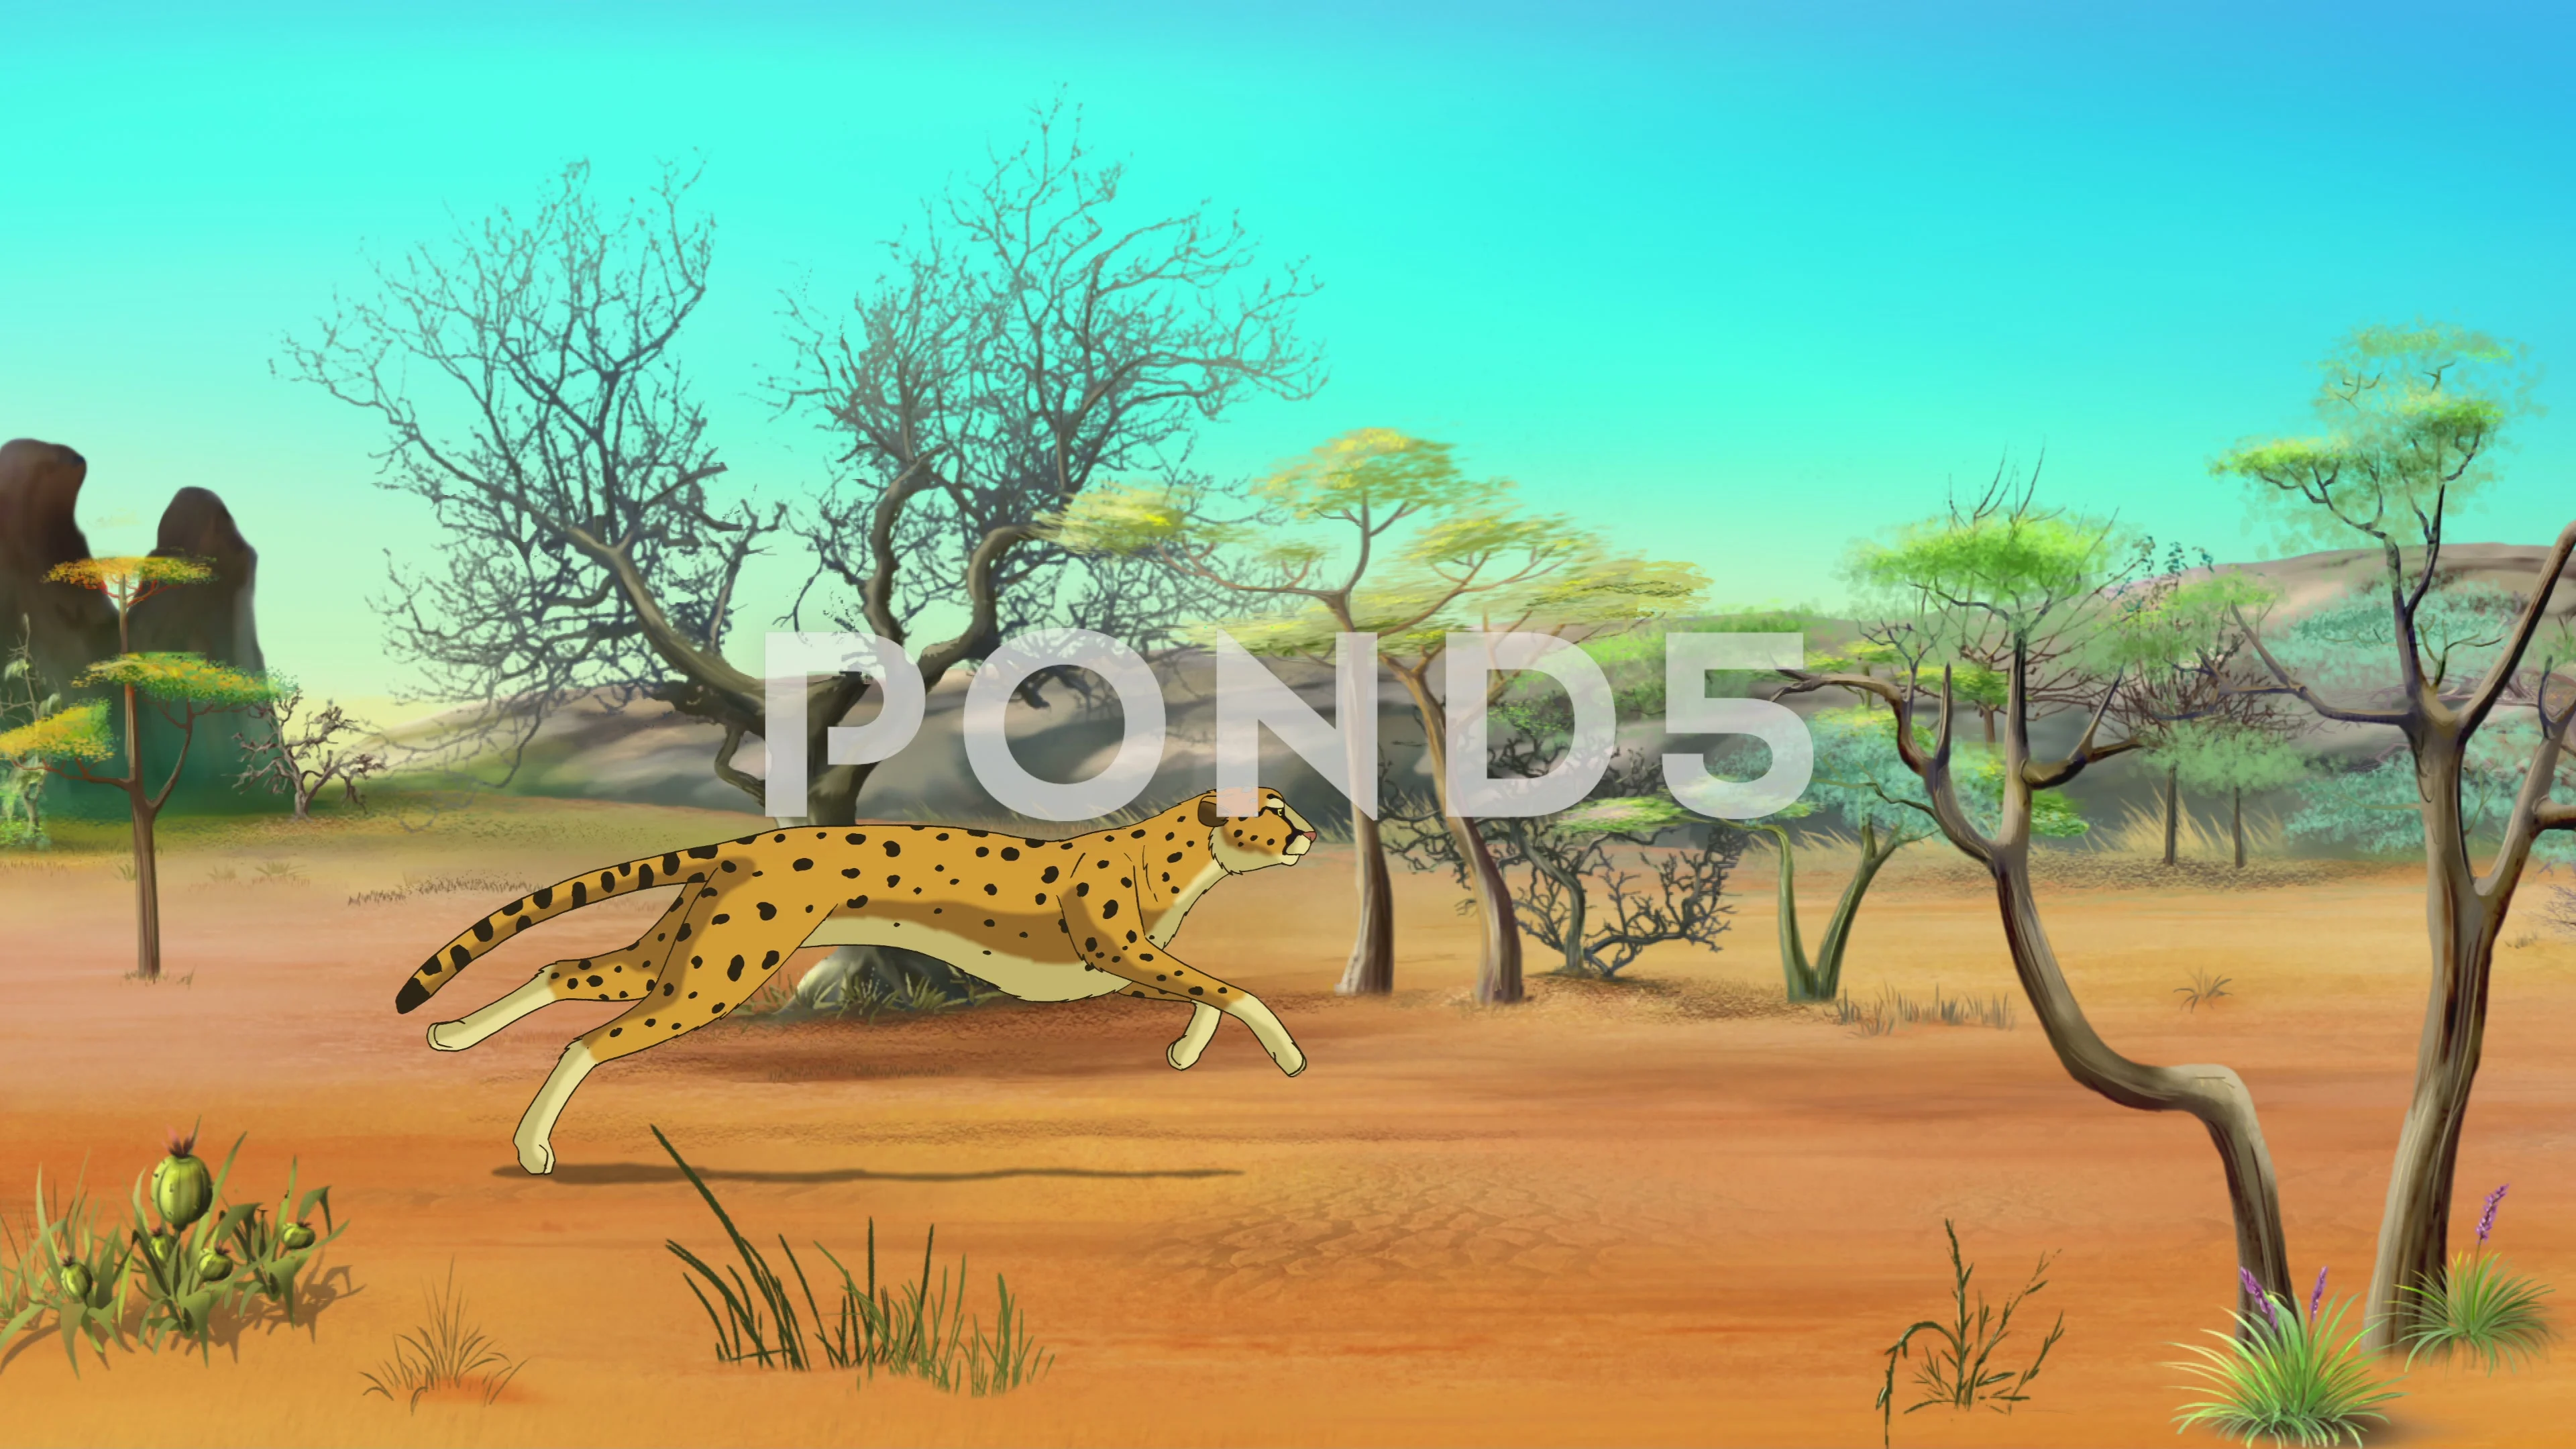 Running Cheetah Animated Footage | Stock Video | Pond5